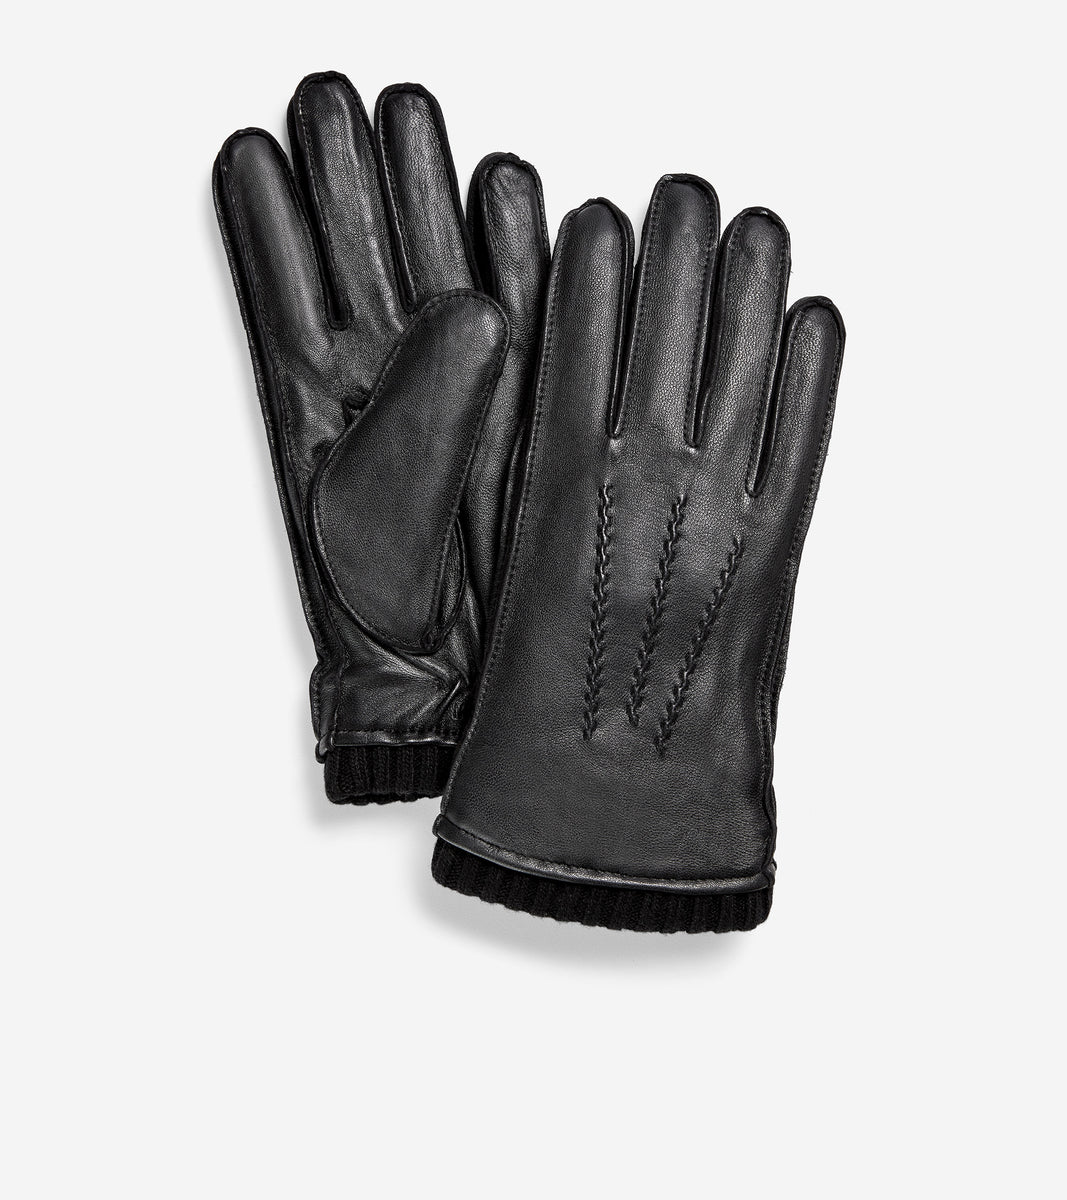 GRANDSERIES Leather Knit Cuff Glove